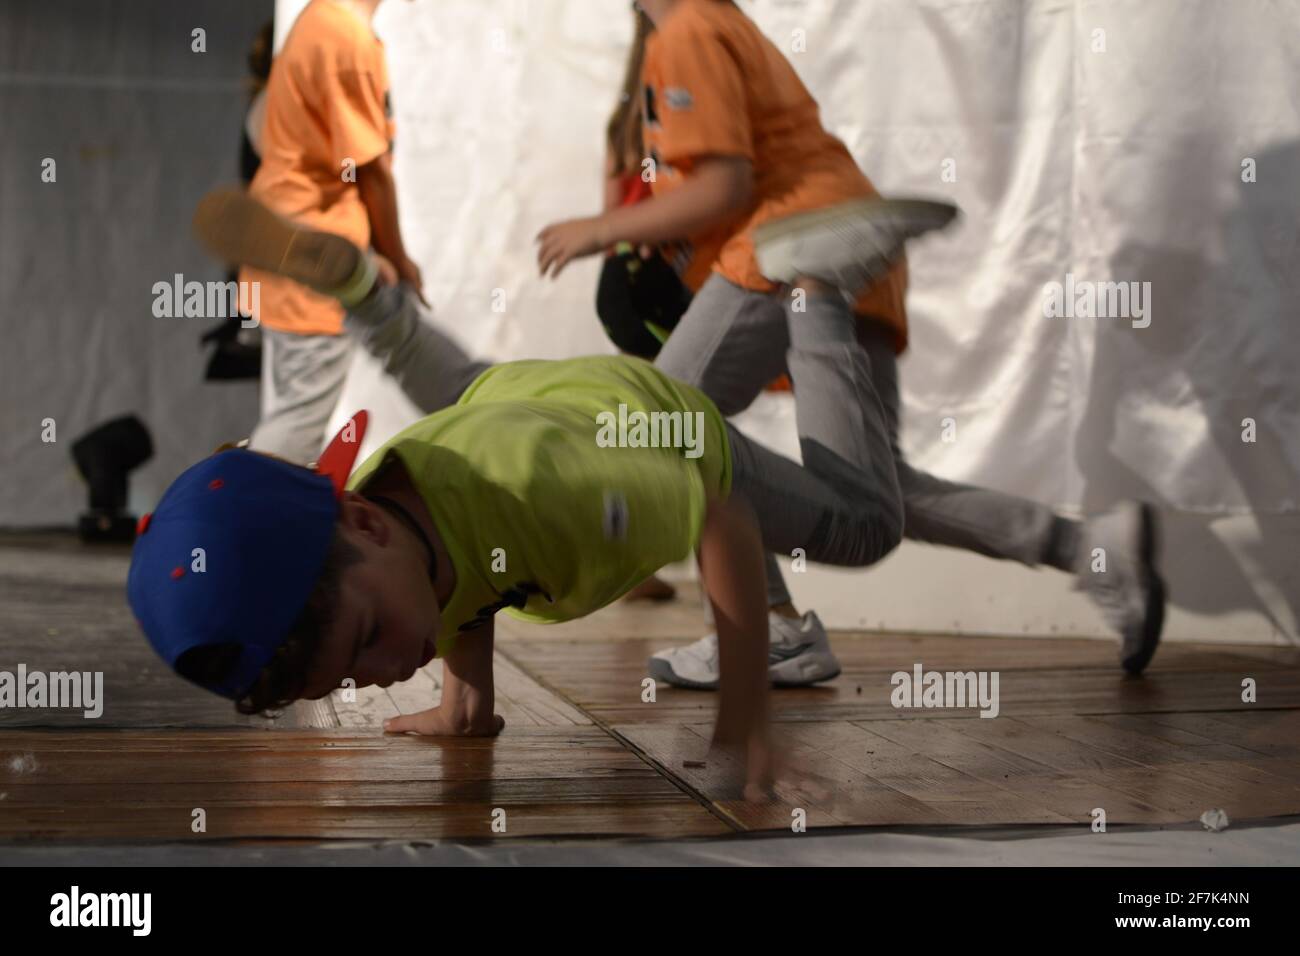 Boy dancing breakdance in frozen child position. Baby freeze breakdance. Stock Photo